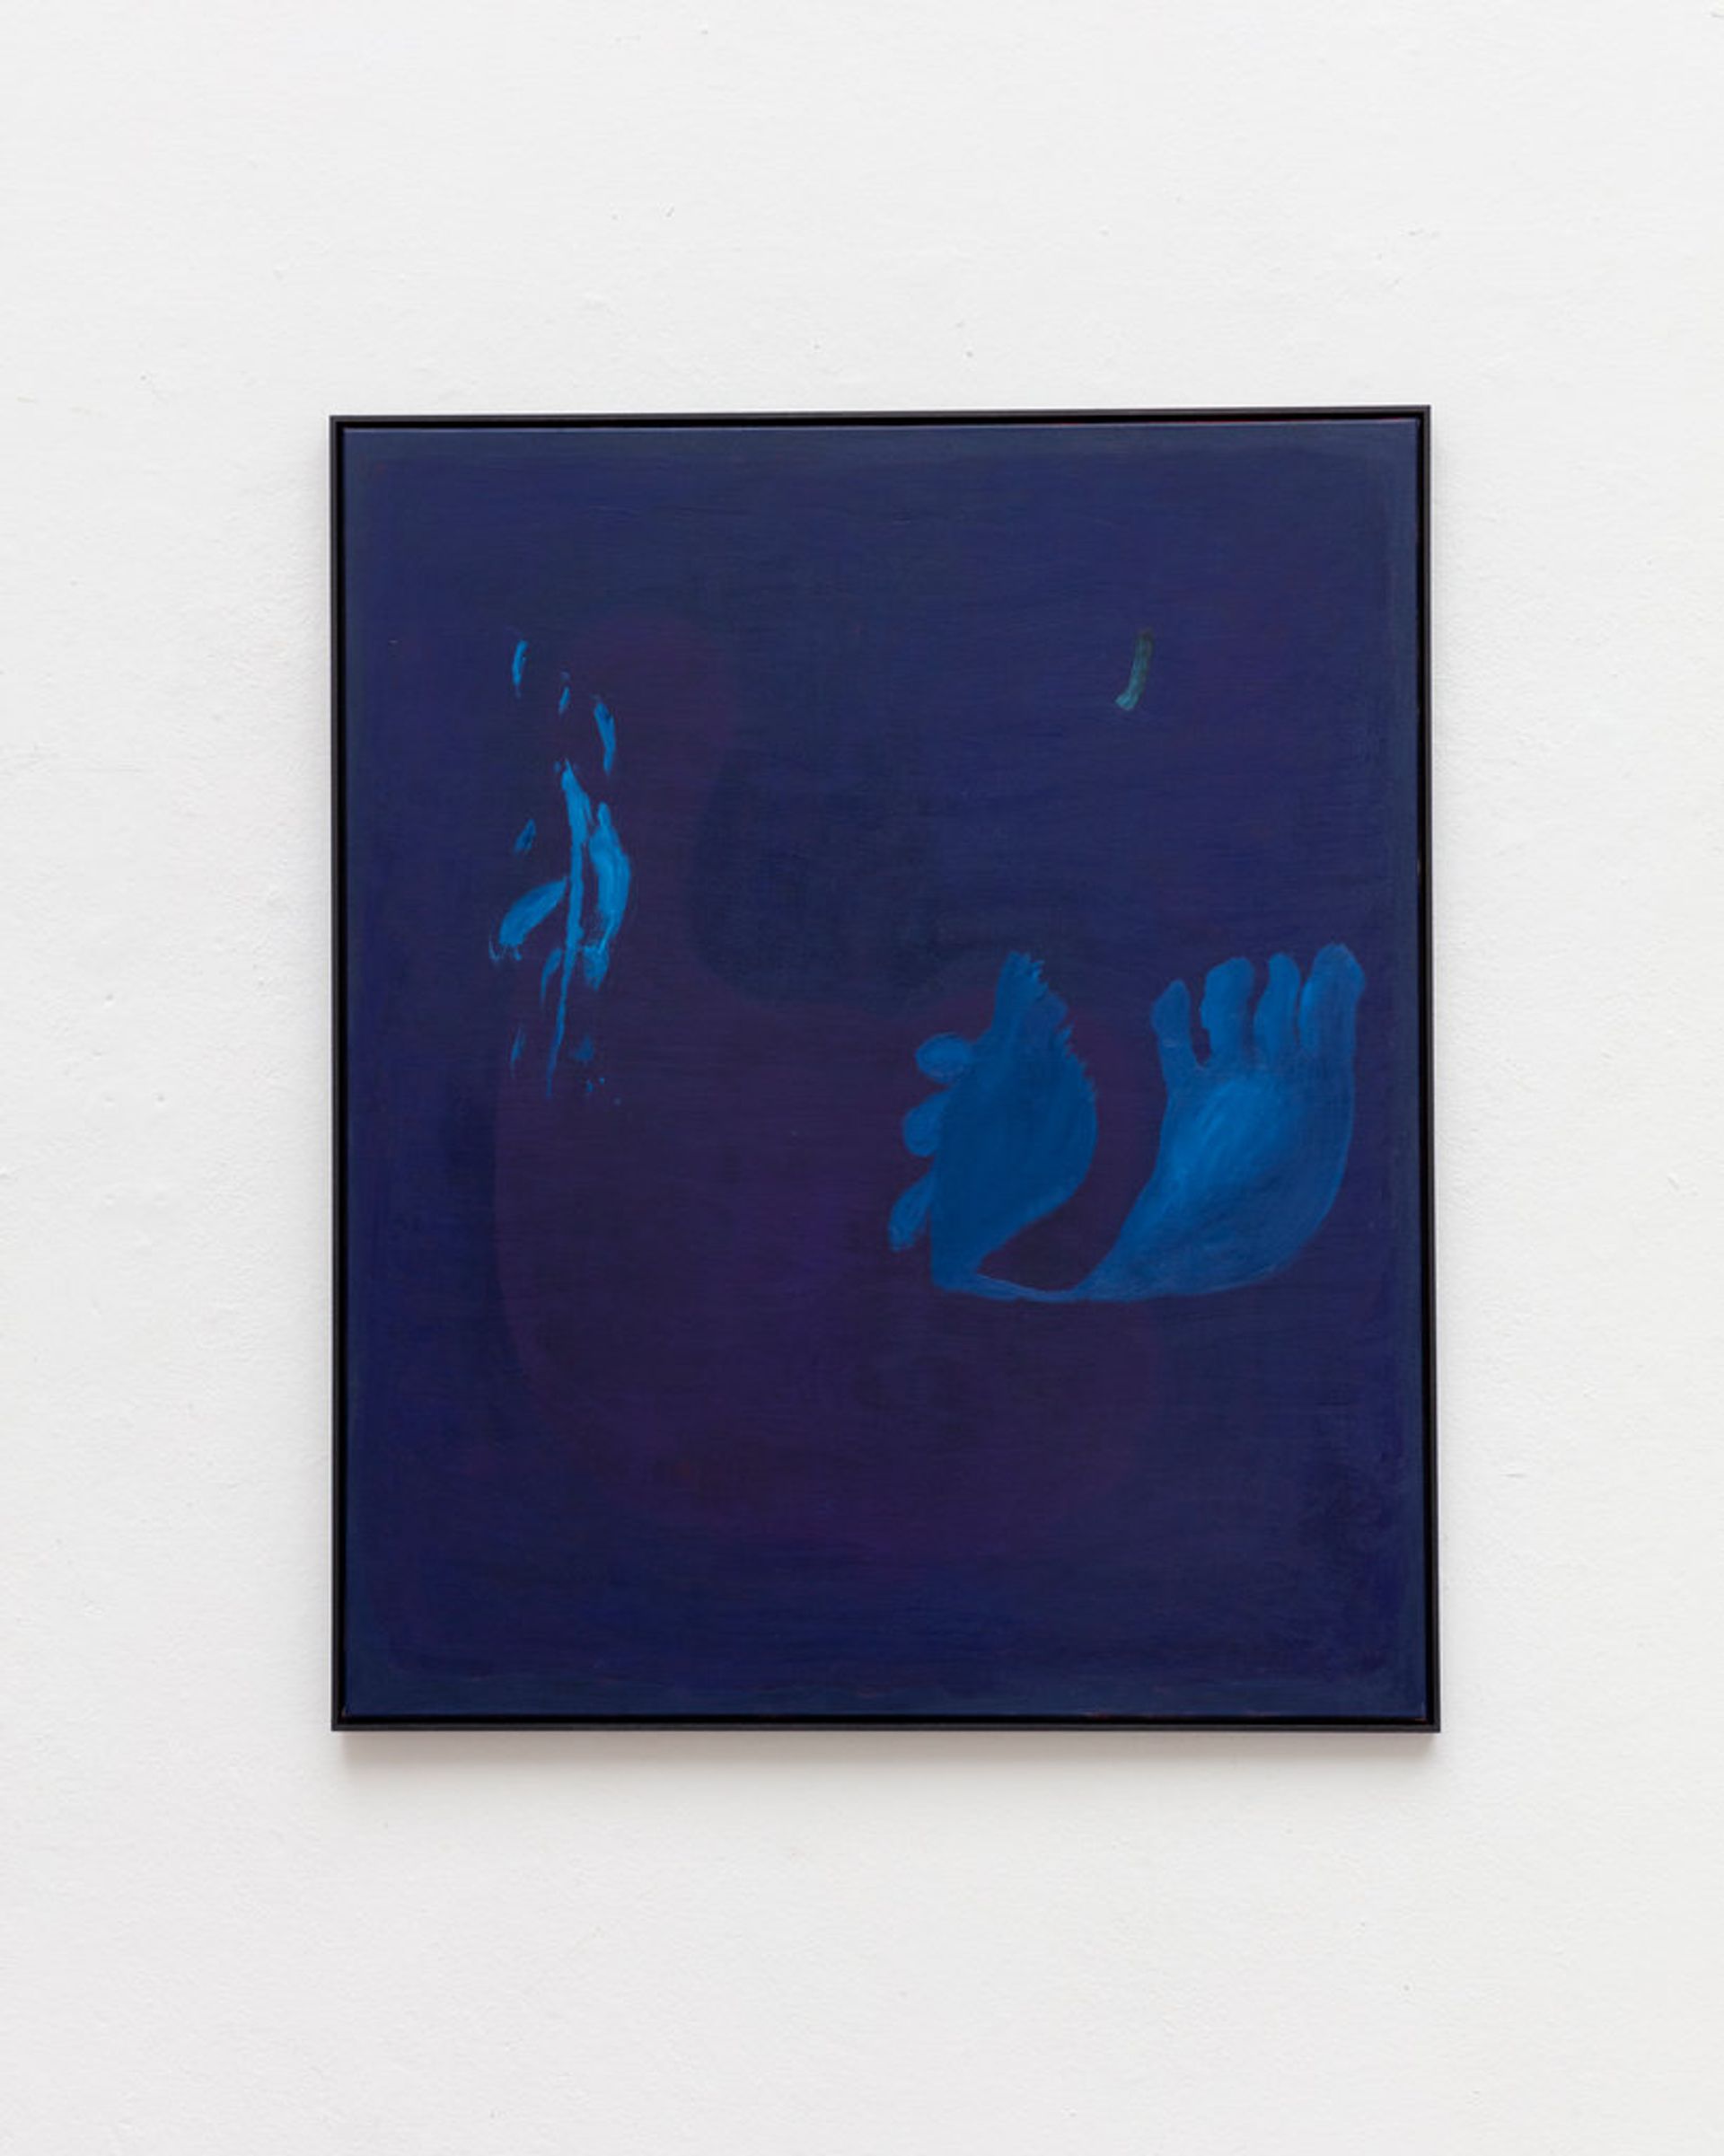 Veronika Hilger, Untitled, 2020, oil on canvas, 120 × 100 cm